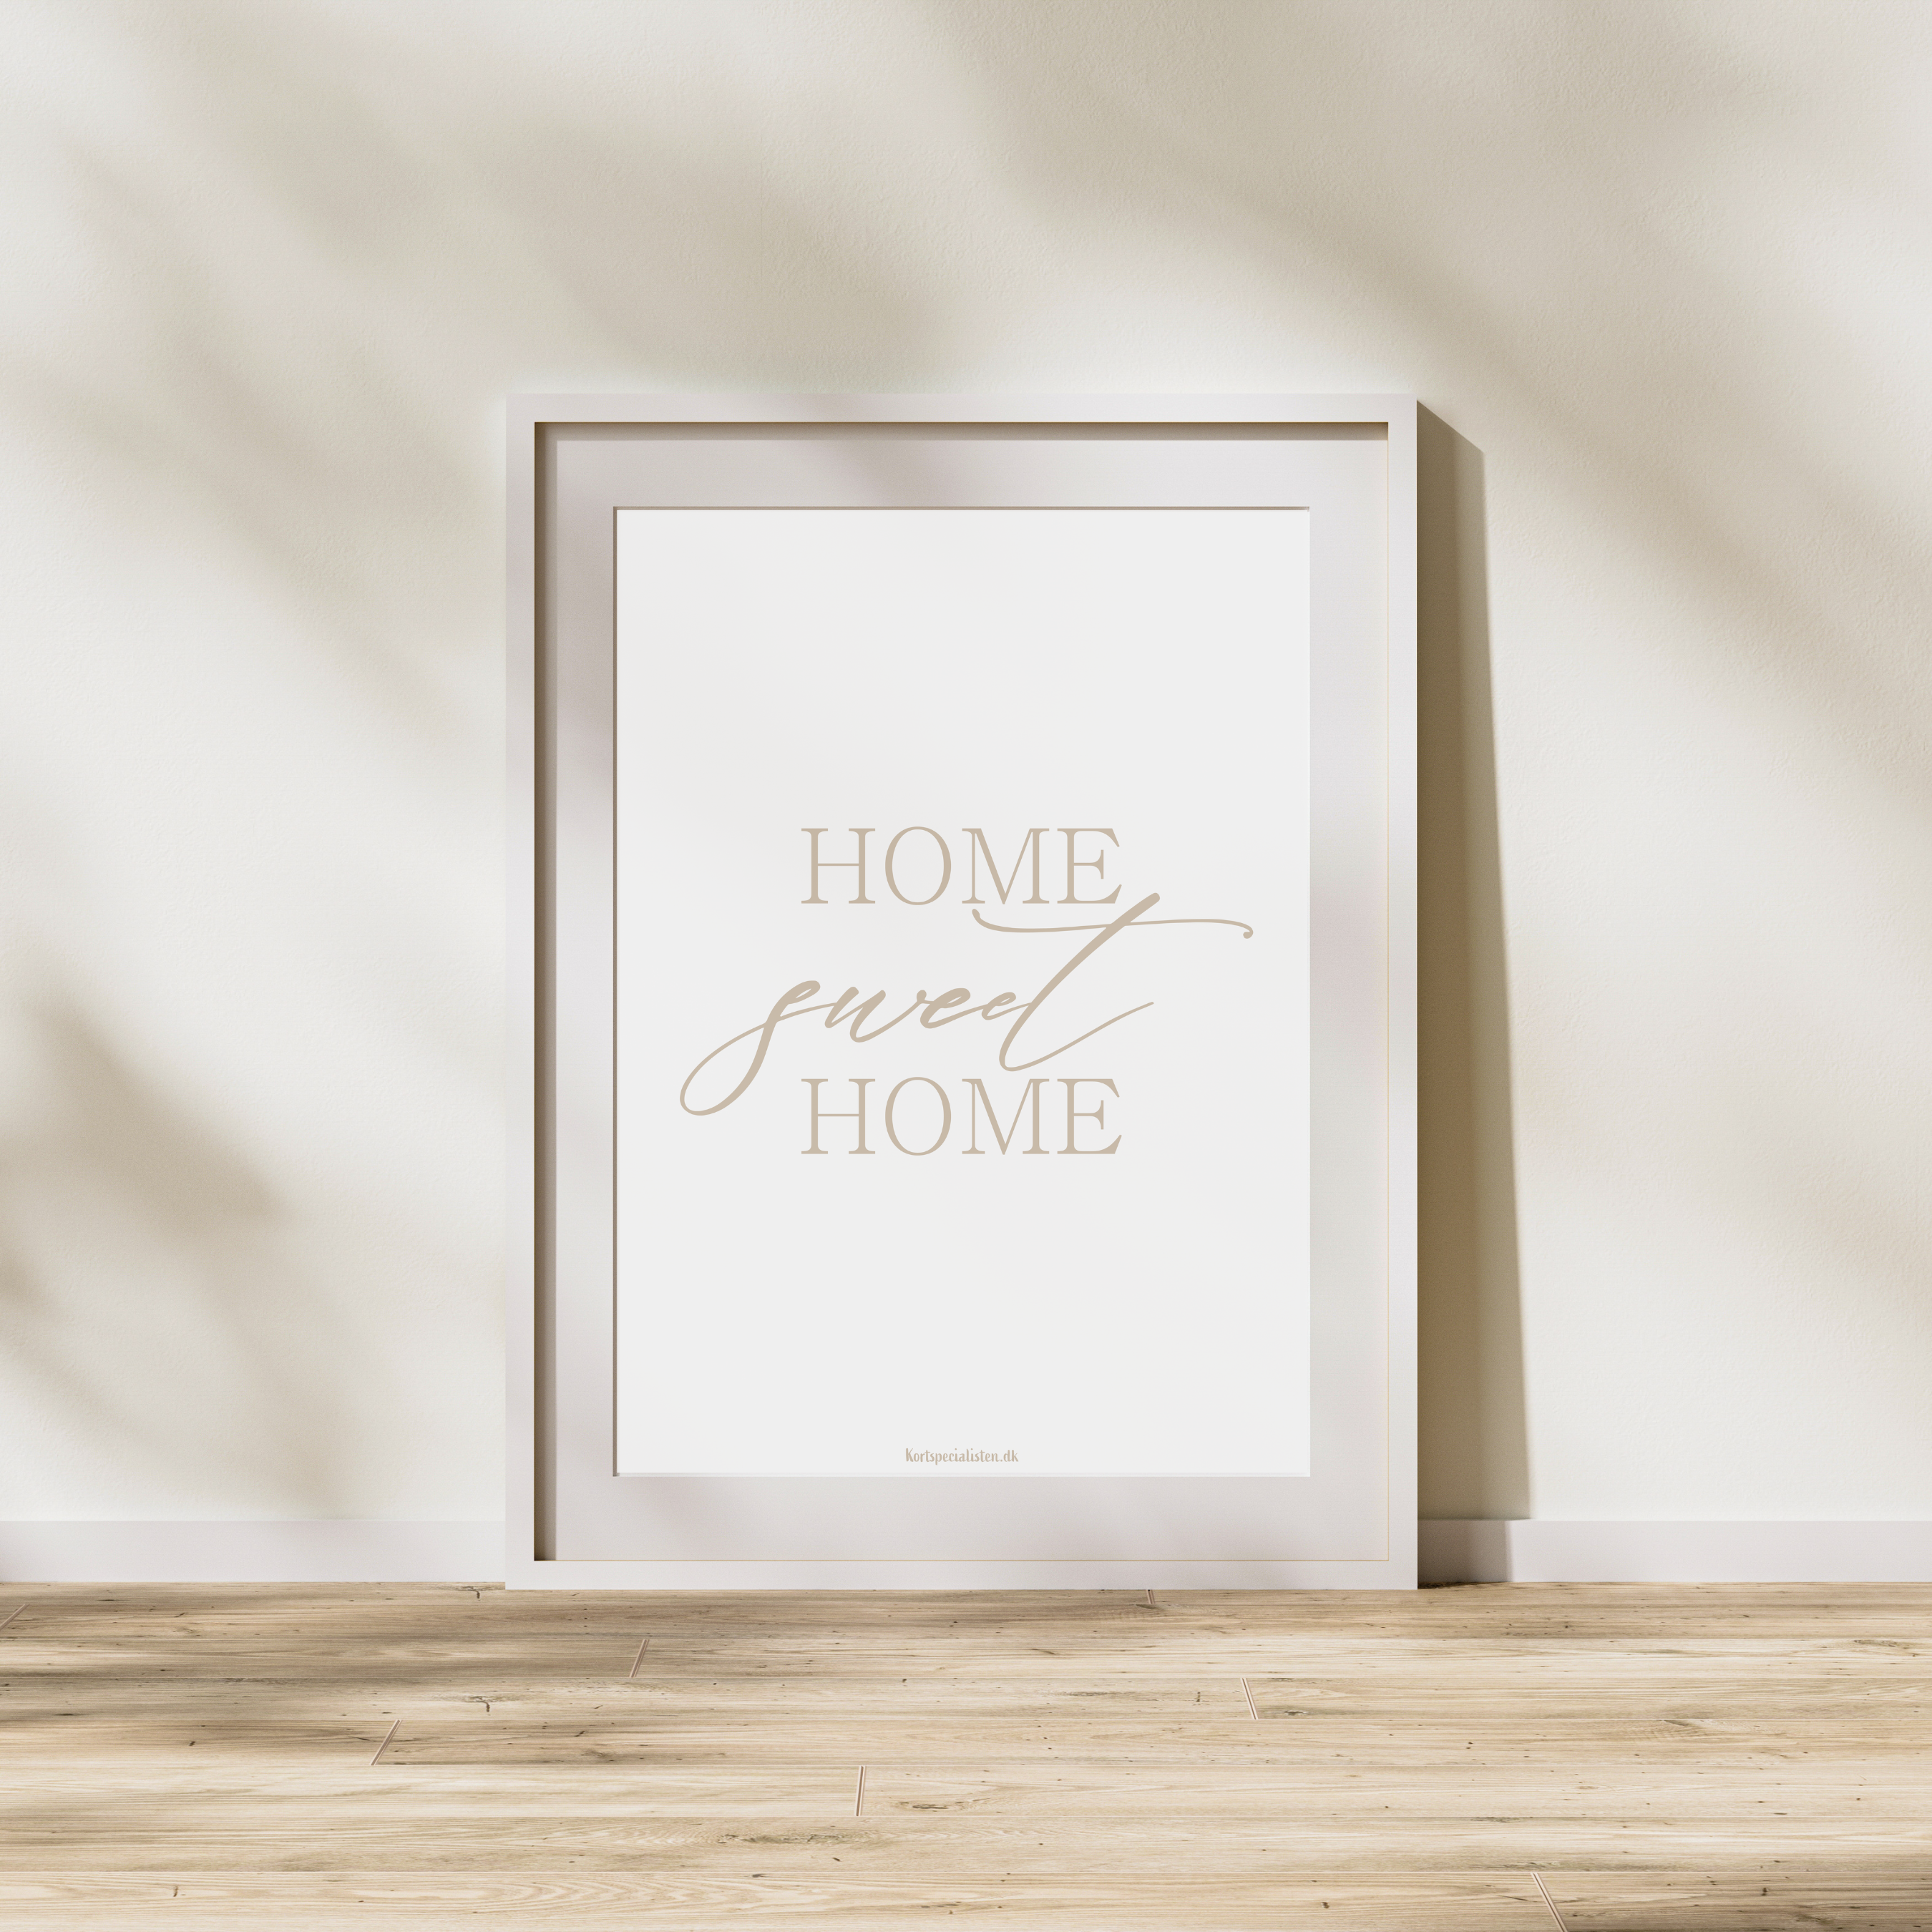 Home sweet home - Plakat